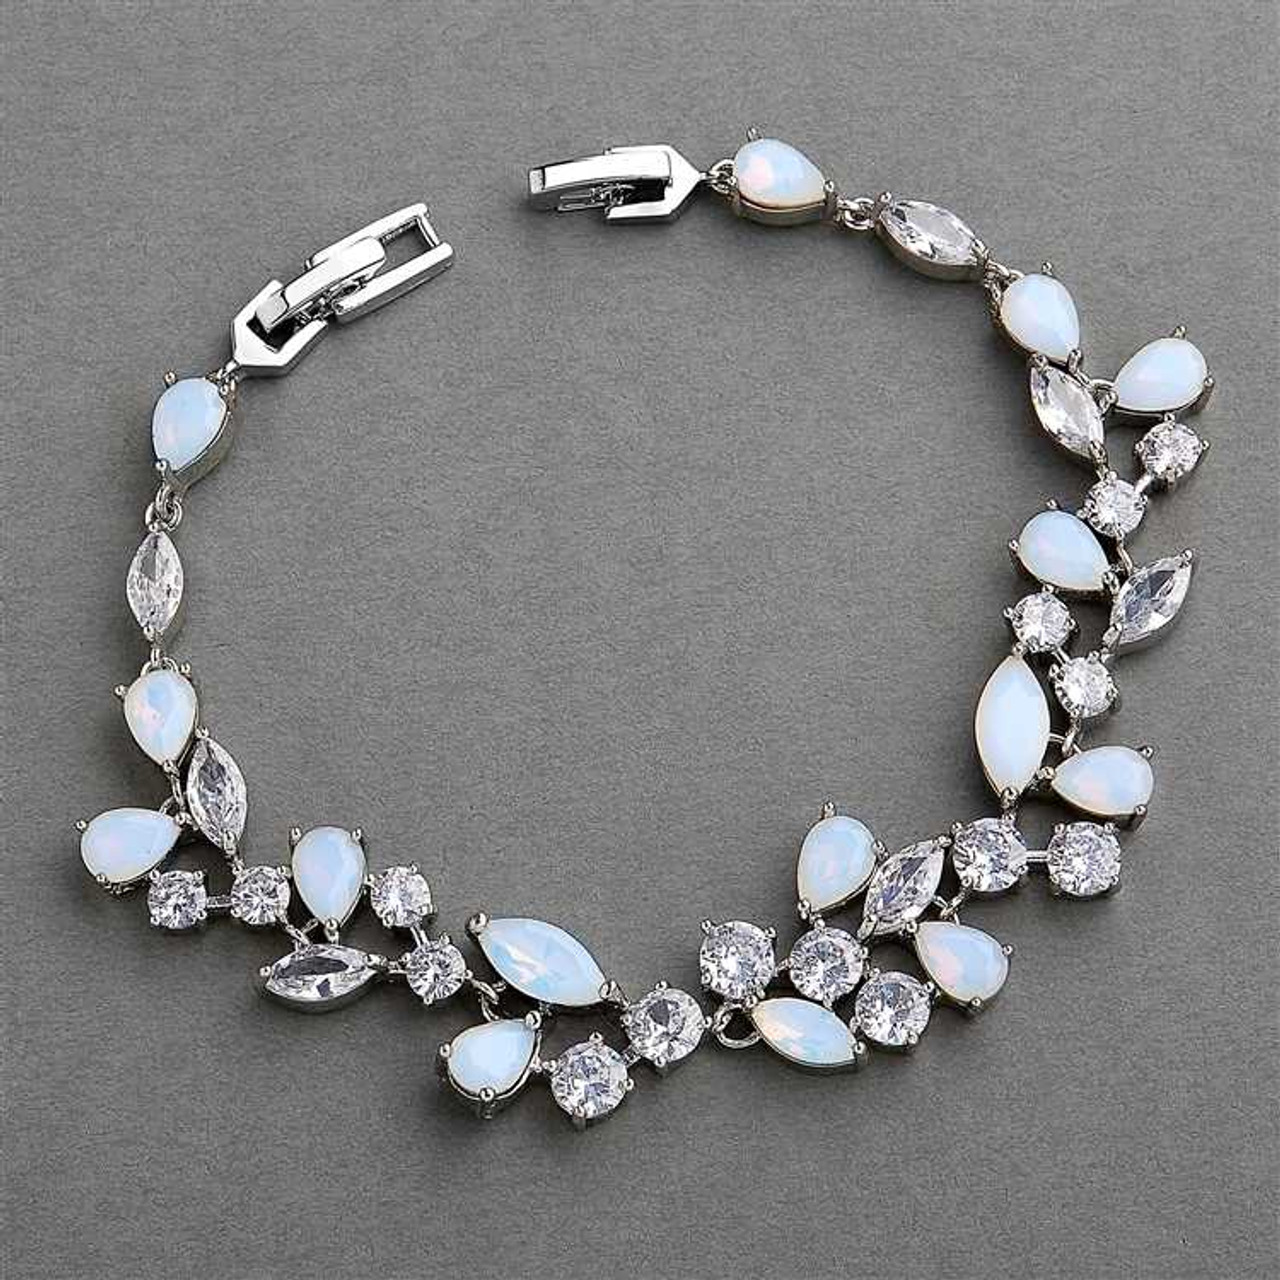 Amethyst, Rose Quartz, Opalite Crystal Bracelet Handmade Jewellery | eBay